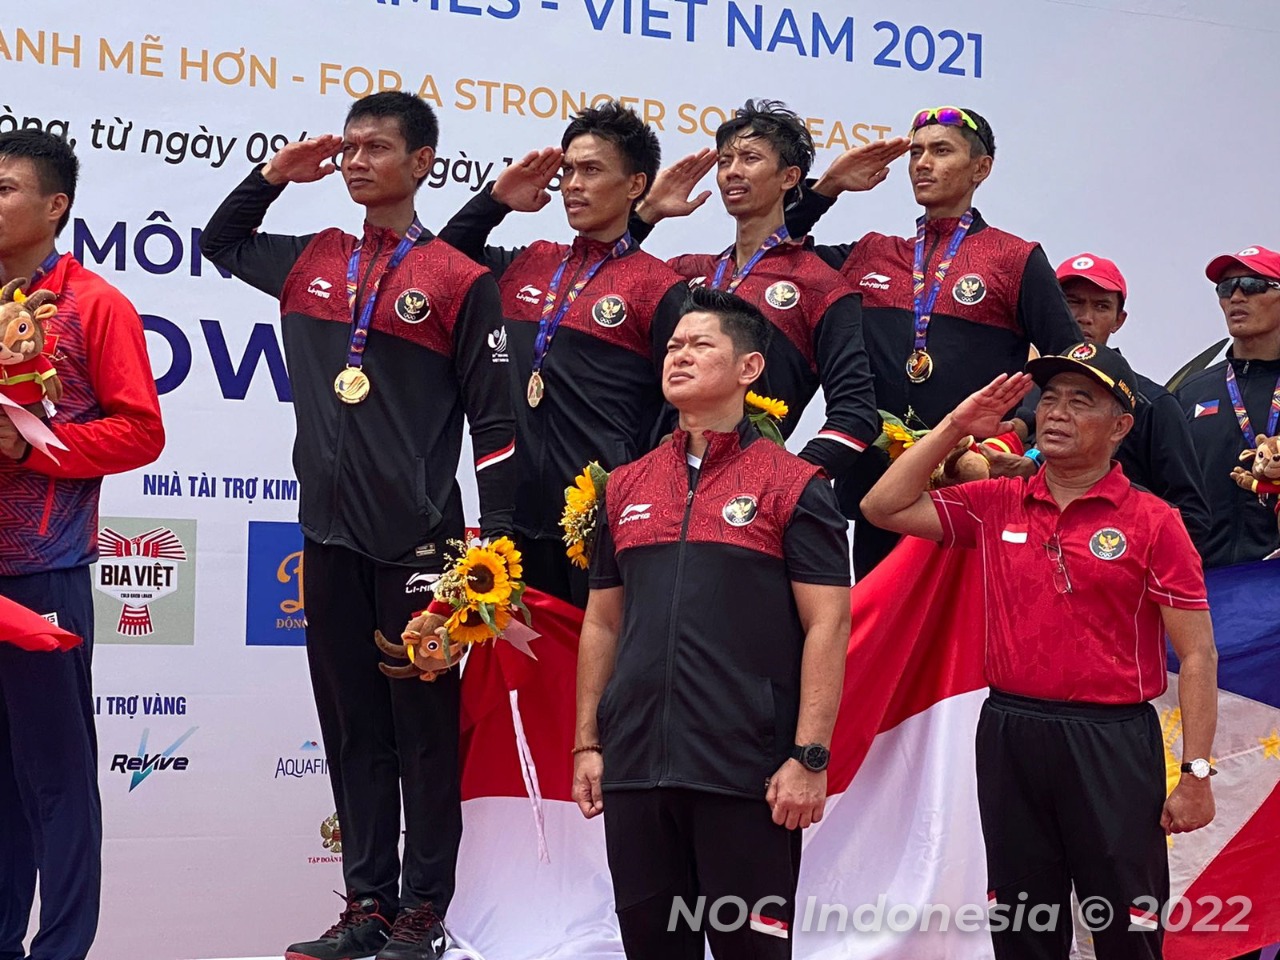 SEA Games 2021 Hanoi: Tim Rowing Indonesia Juara Umum, Menpora Amali: Terima Kasih Pak Basuki!